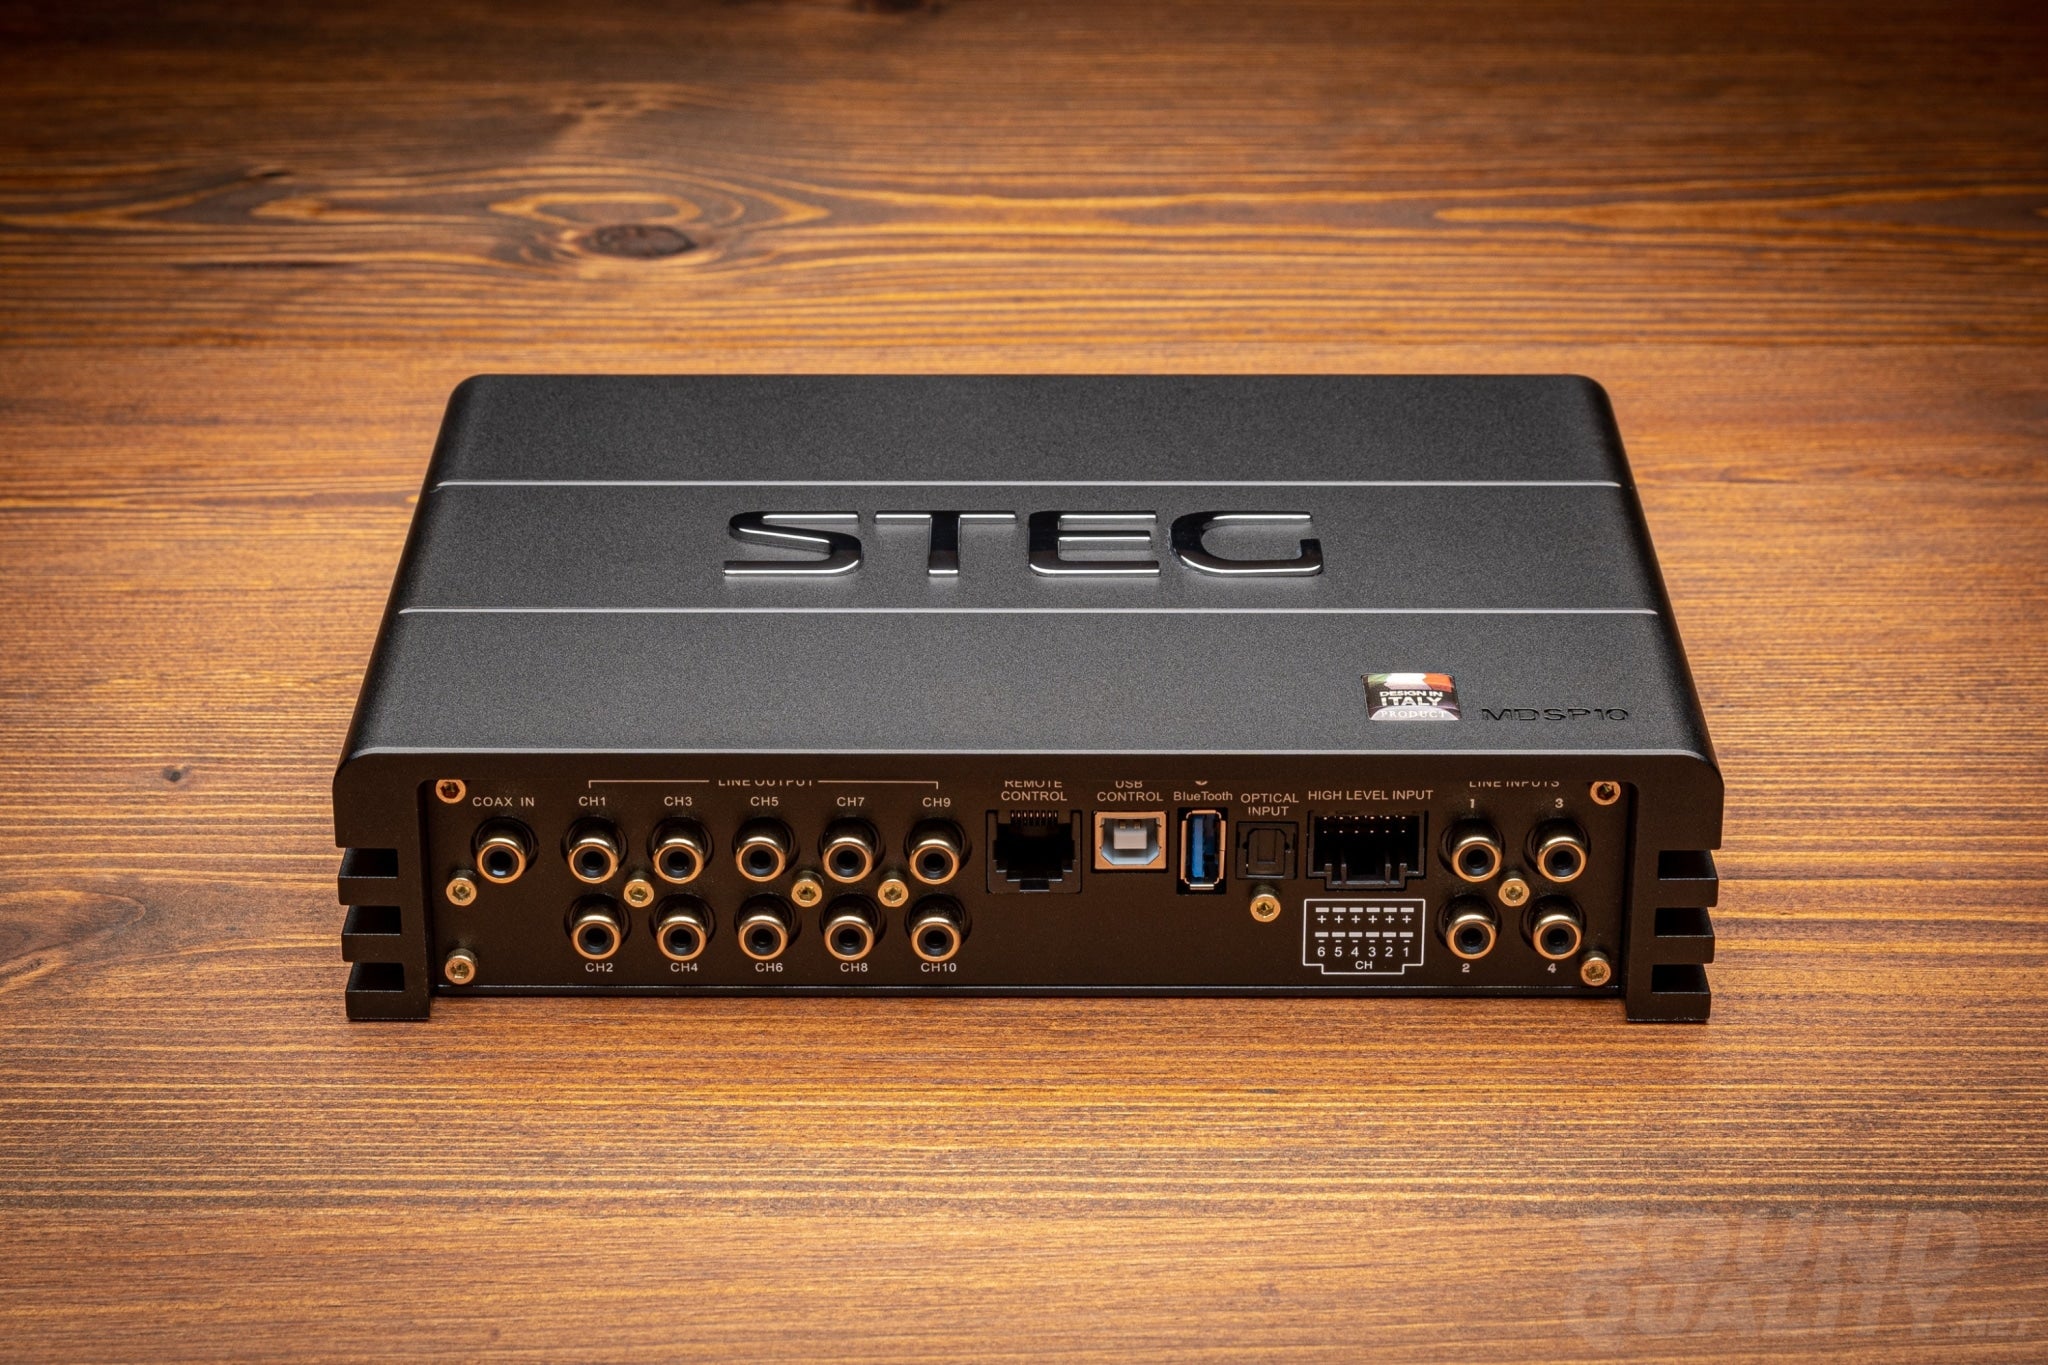 Steg Mdsp10 8-Channel Amplifier With 10-Channel Dsp